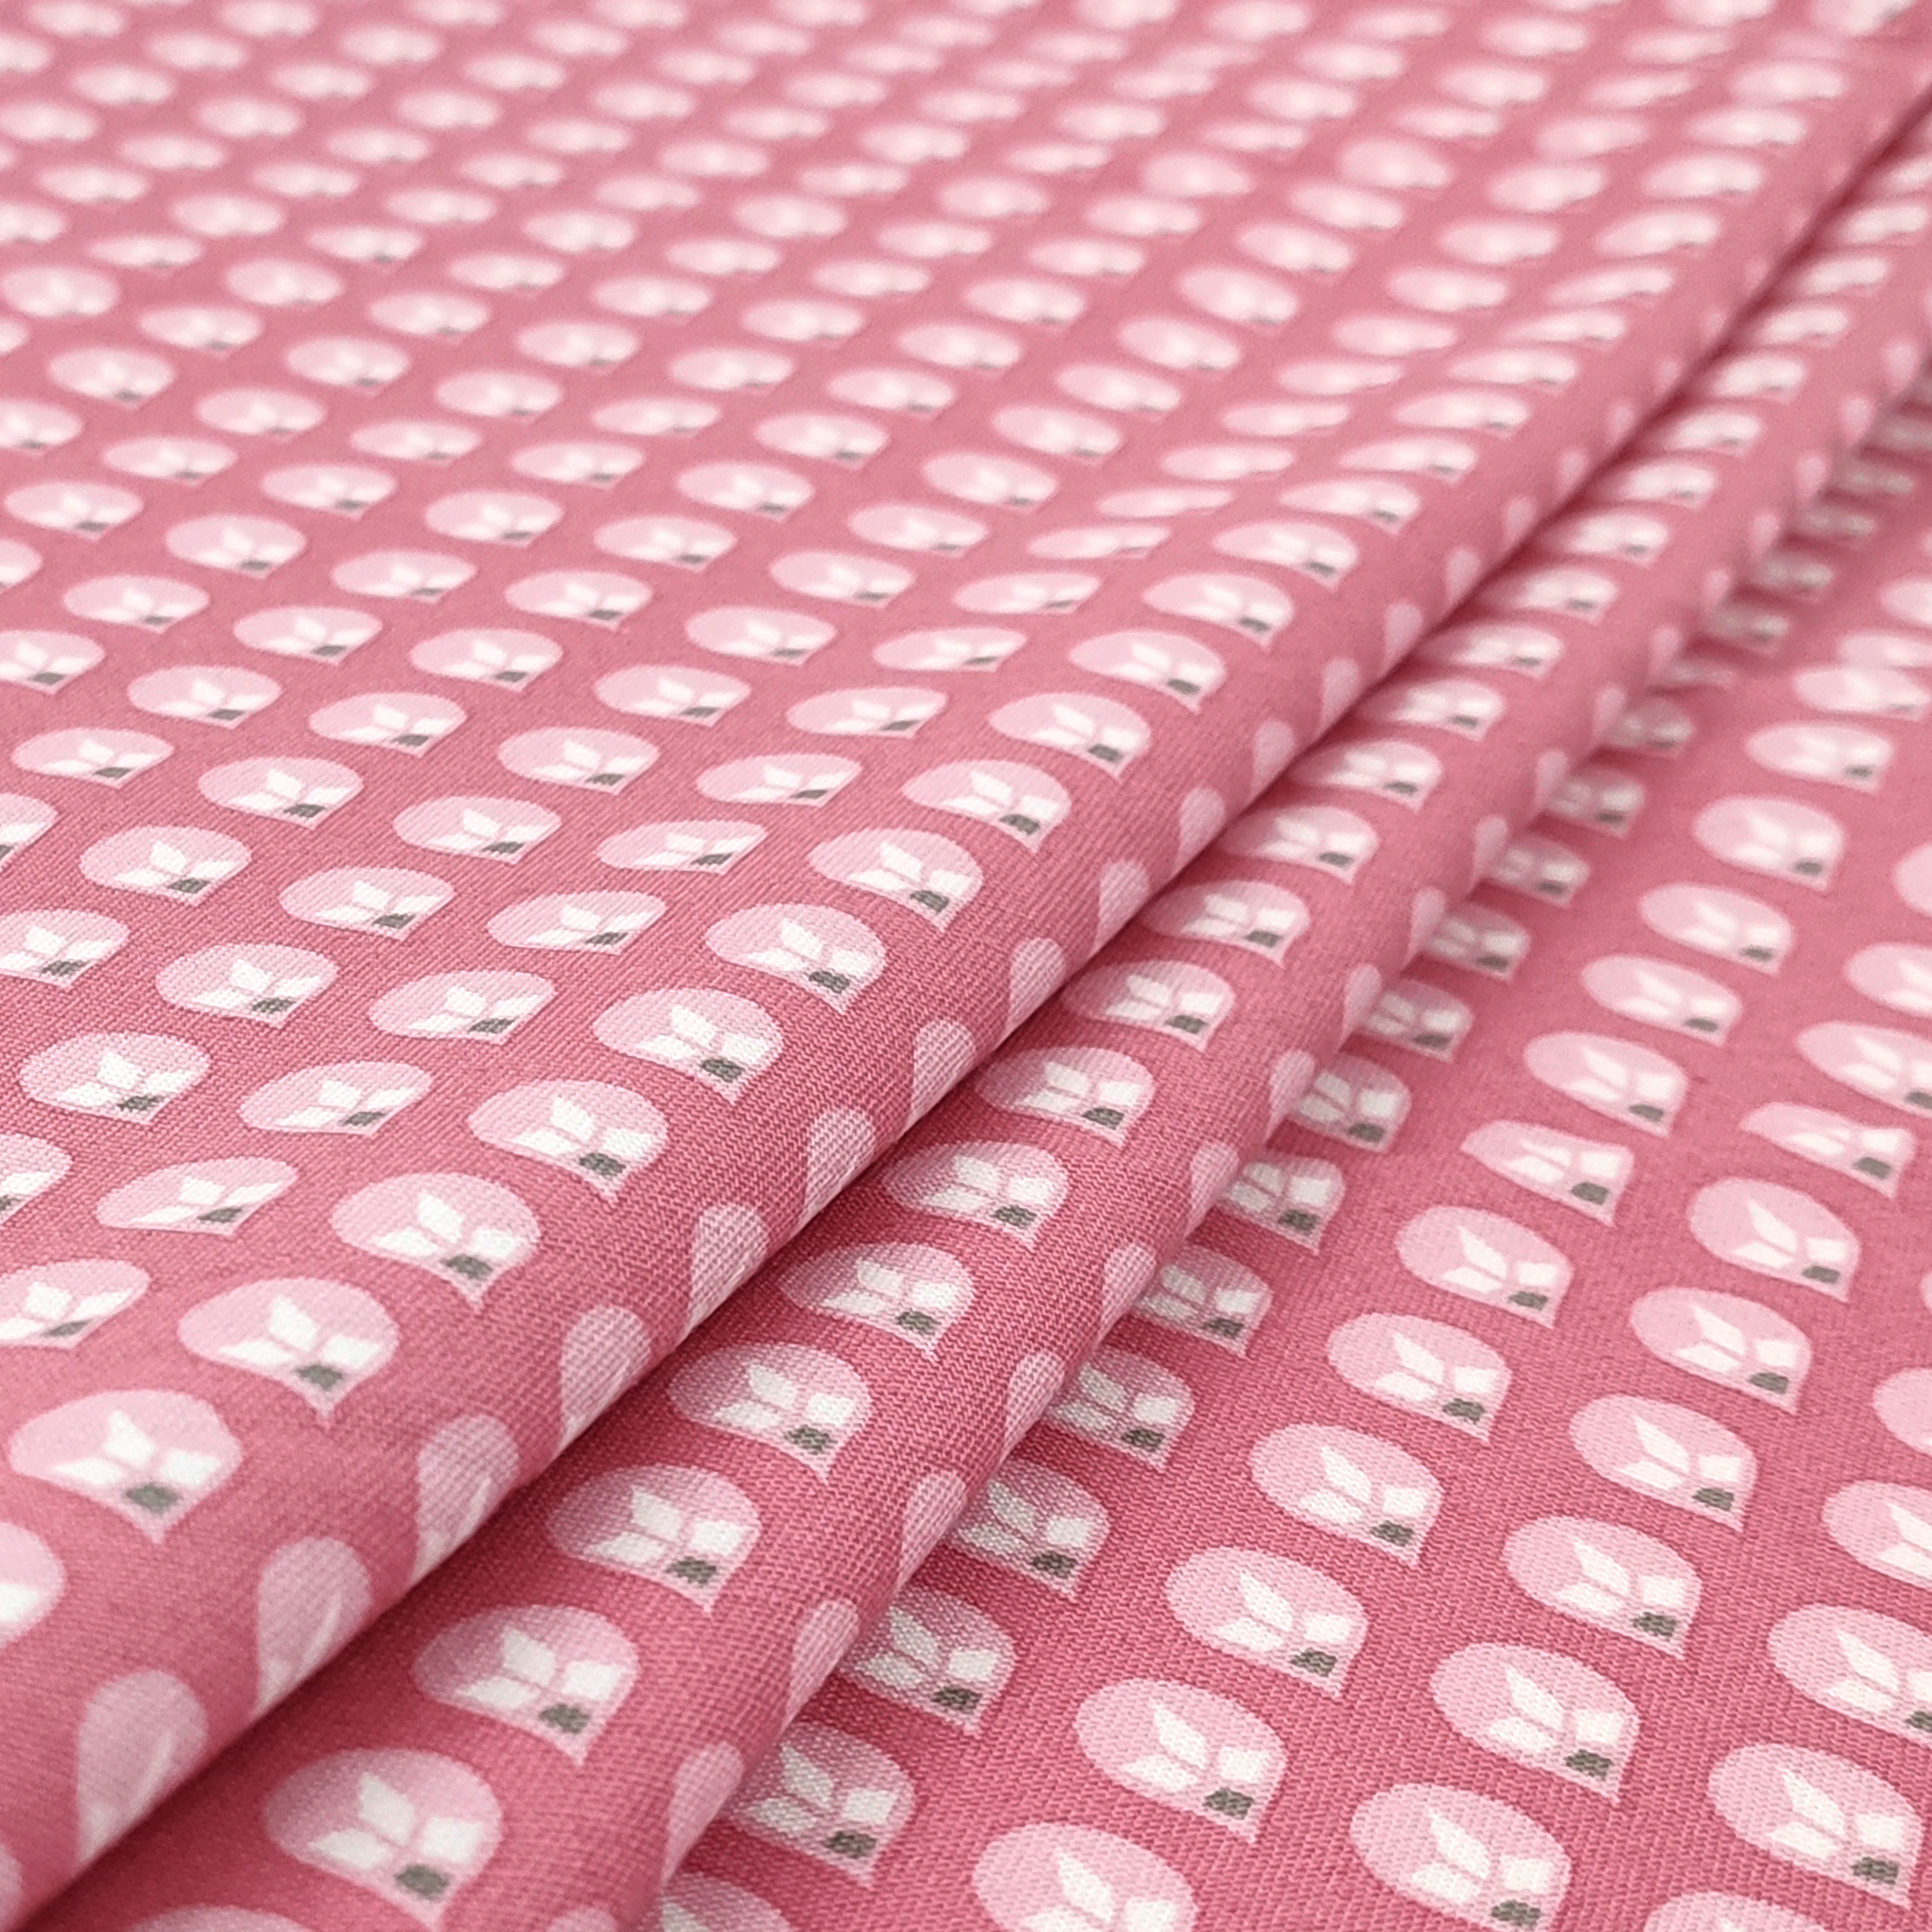 Cotone gocce di rugiada rosa